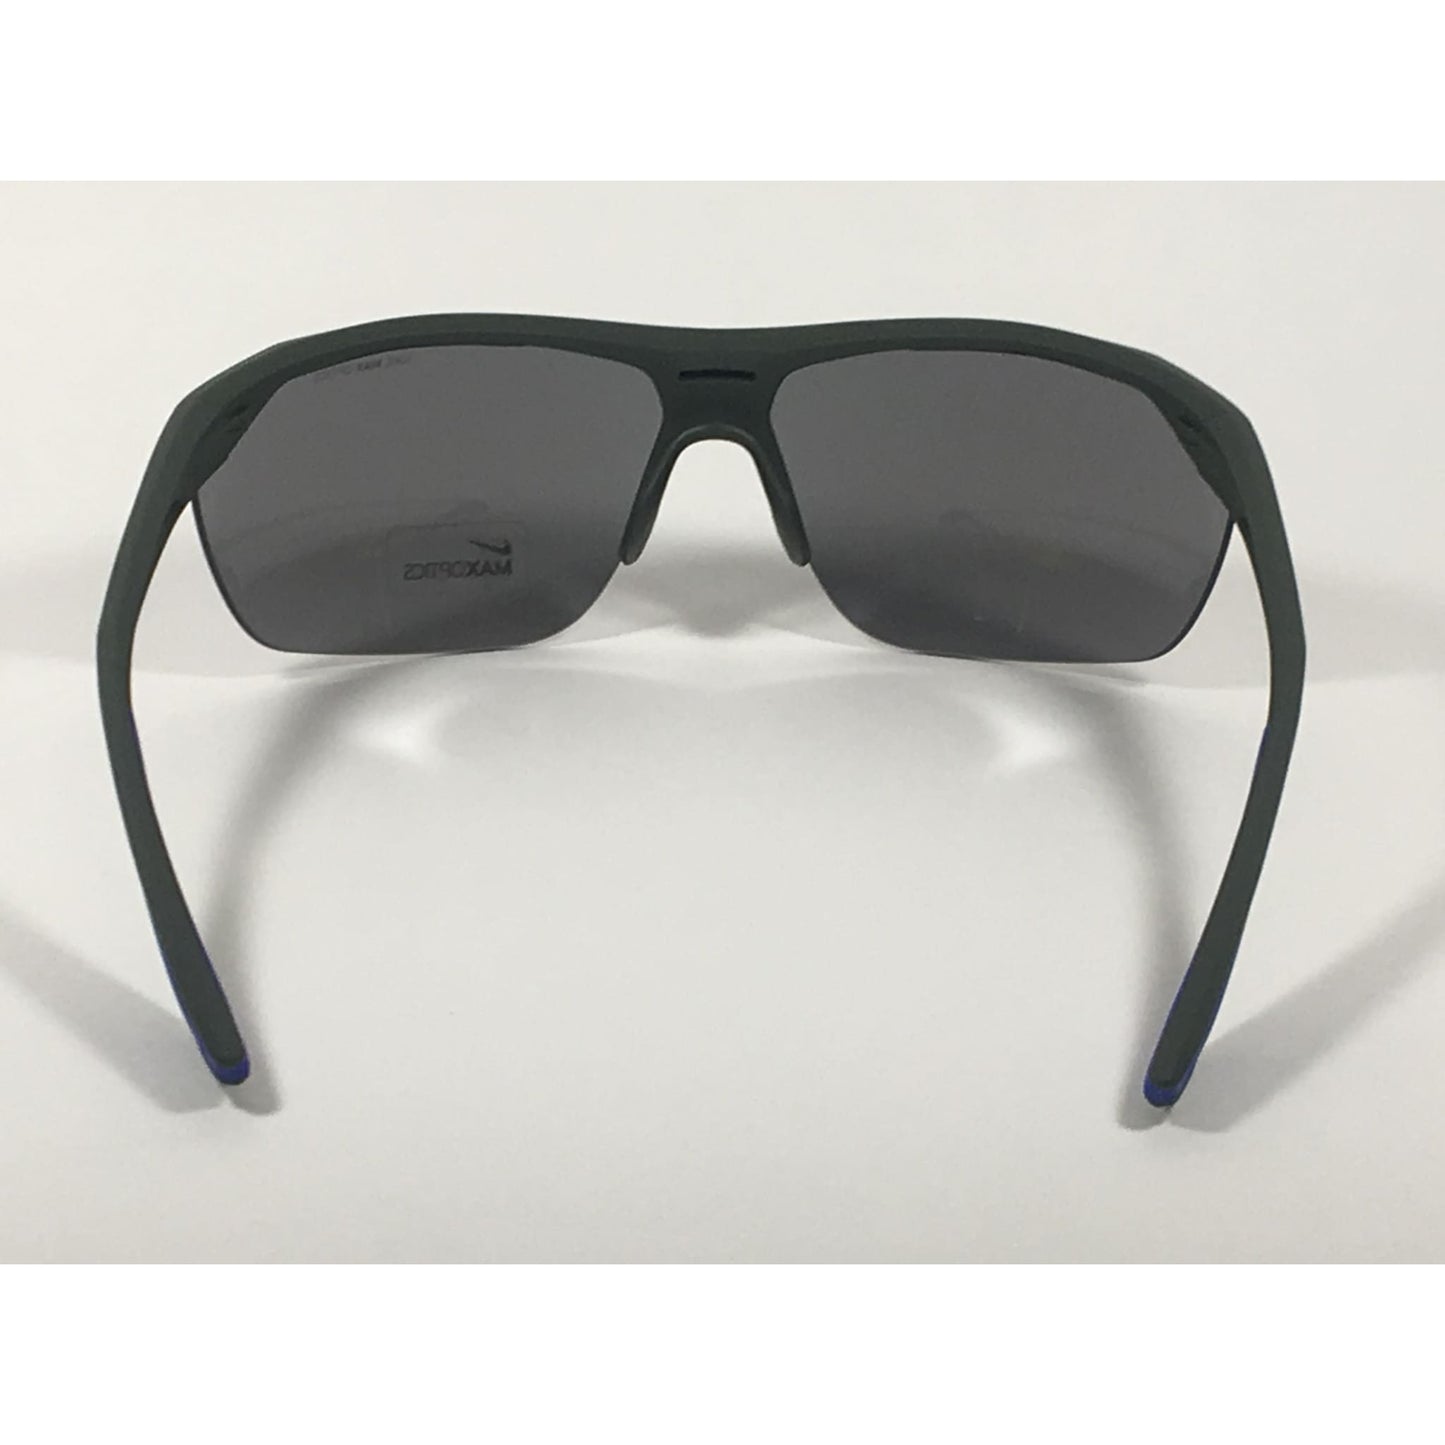 Nike Tailwind Sport Sunglasses EV0915 310 416 Graphite Gray Blue Frame Gray Mirror Lens - Sunglasses